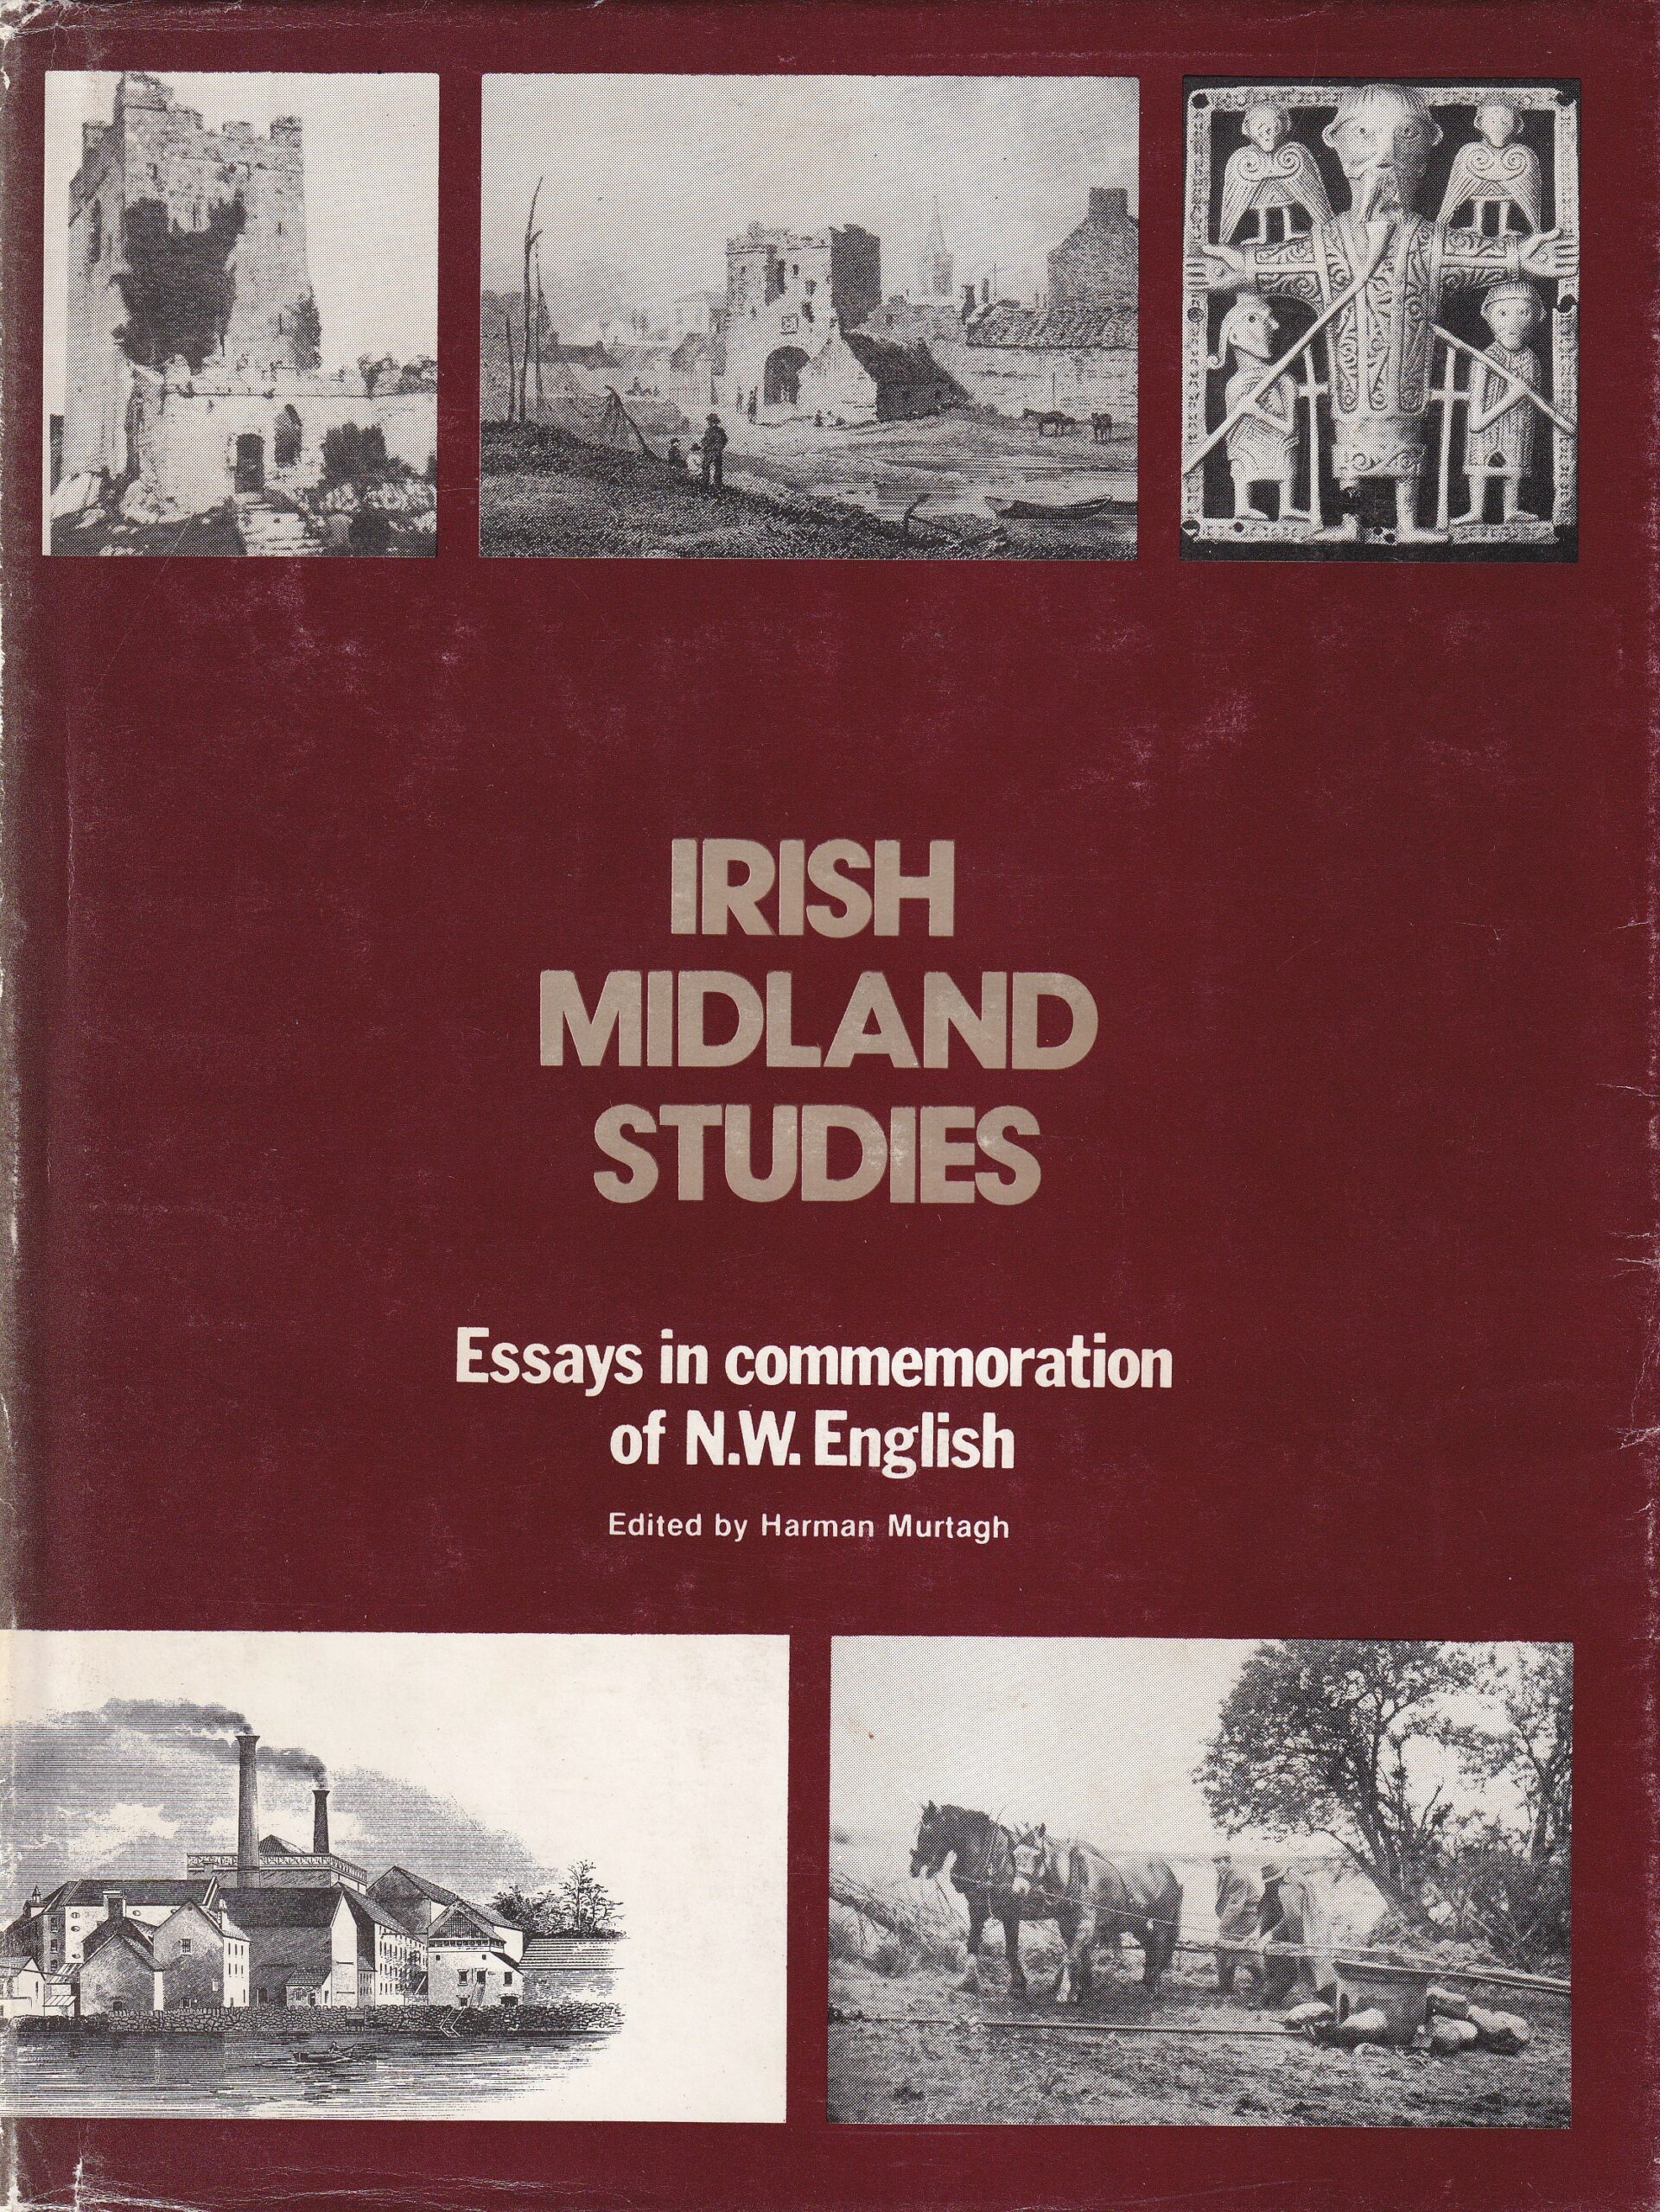 Irish Midlands Studies: Essays in Commemoration of N.W. English by Harman Murtagh (ed.)